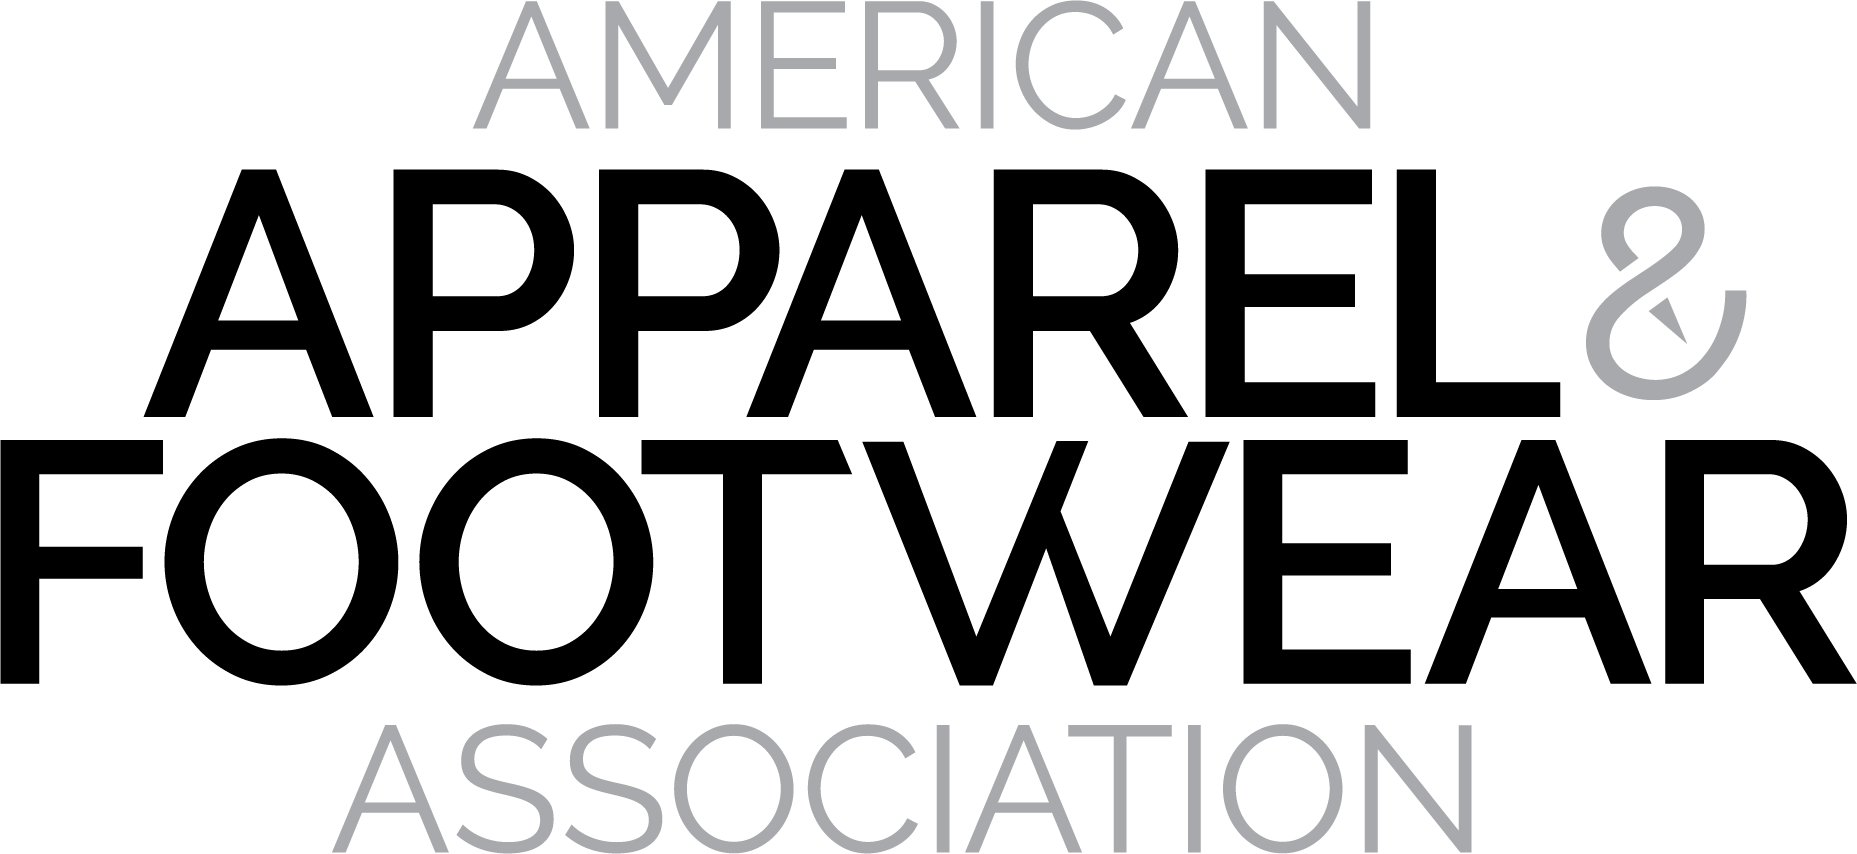 AAFA Logo